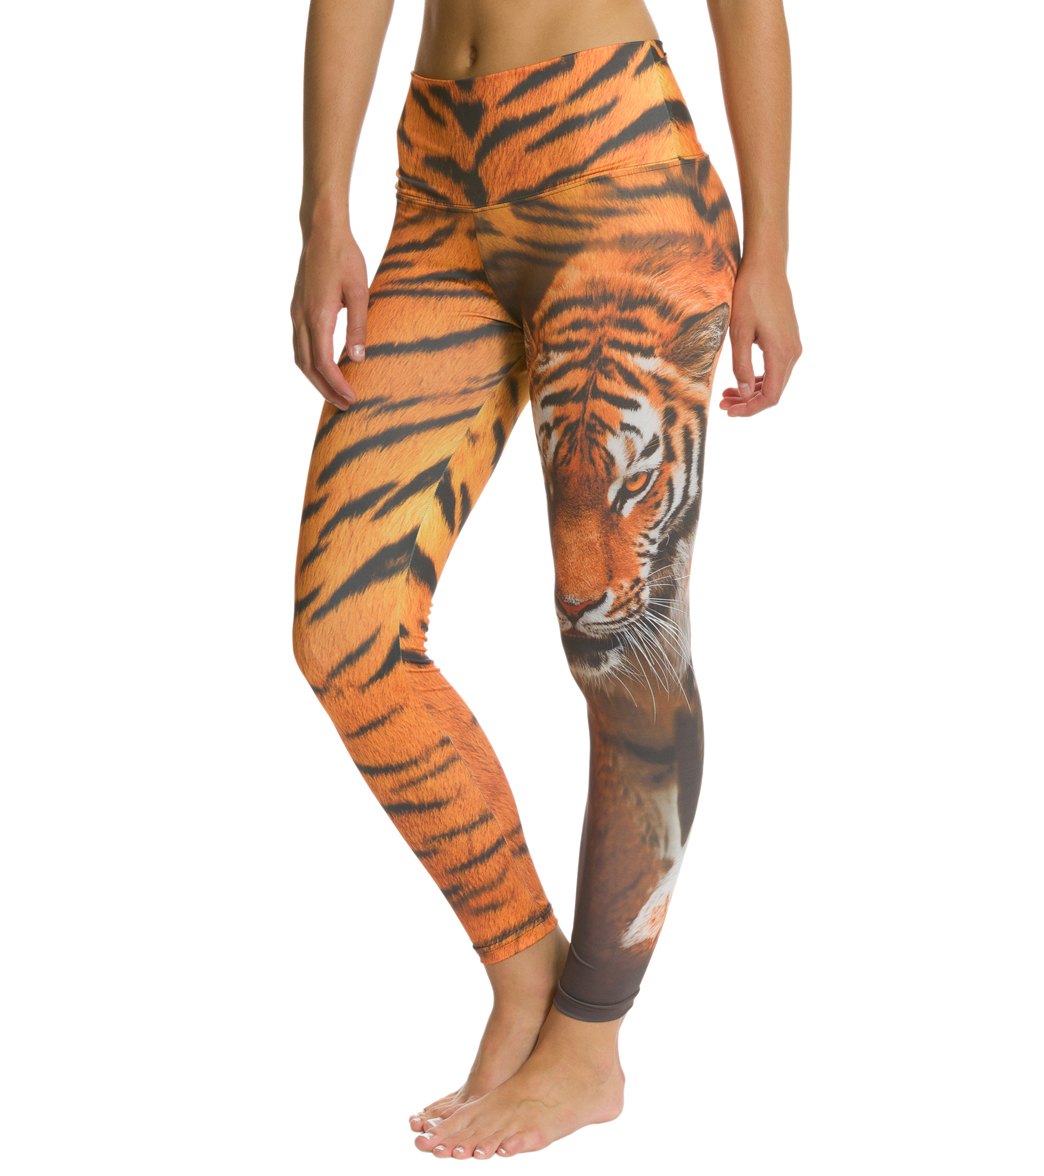 Om Shanti Clothing Tiger Half Skin Yoga Leggings-featured_image